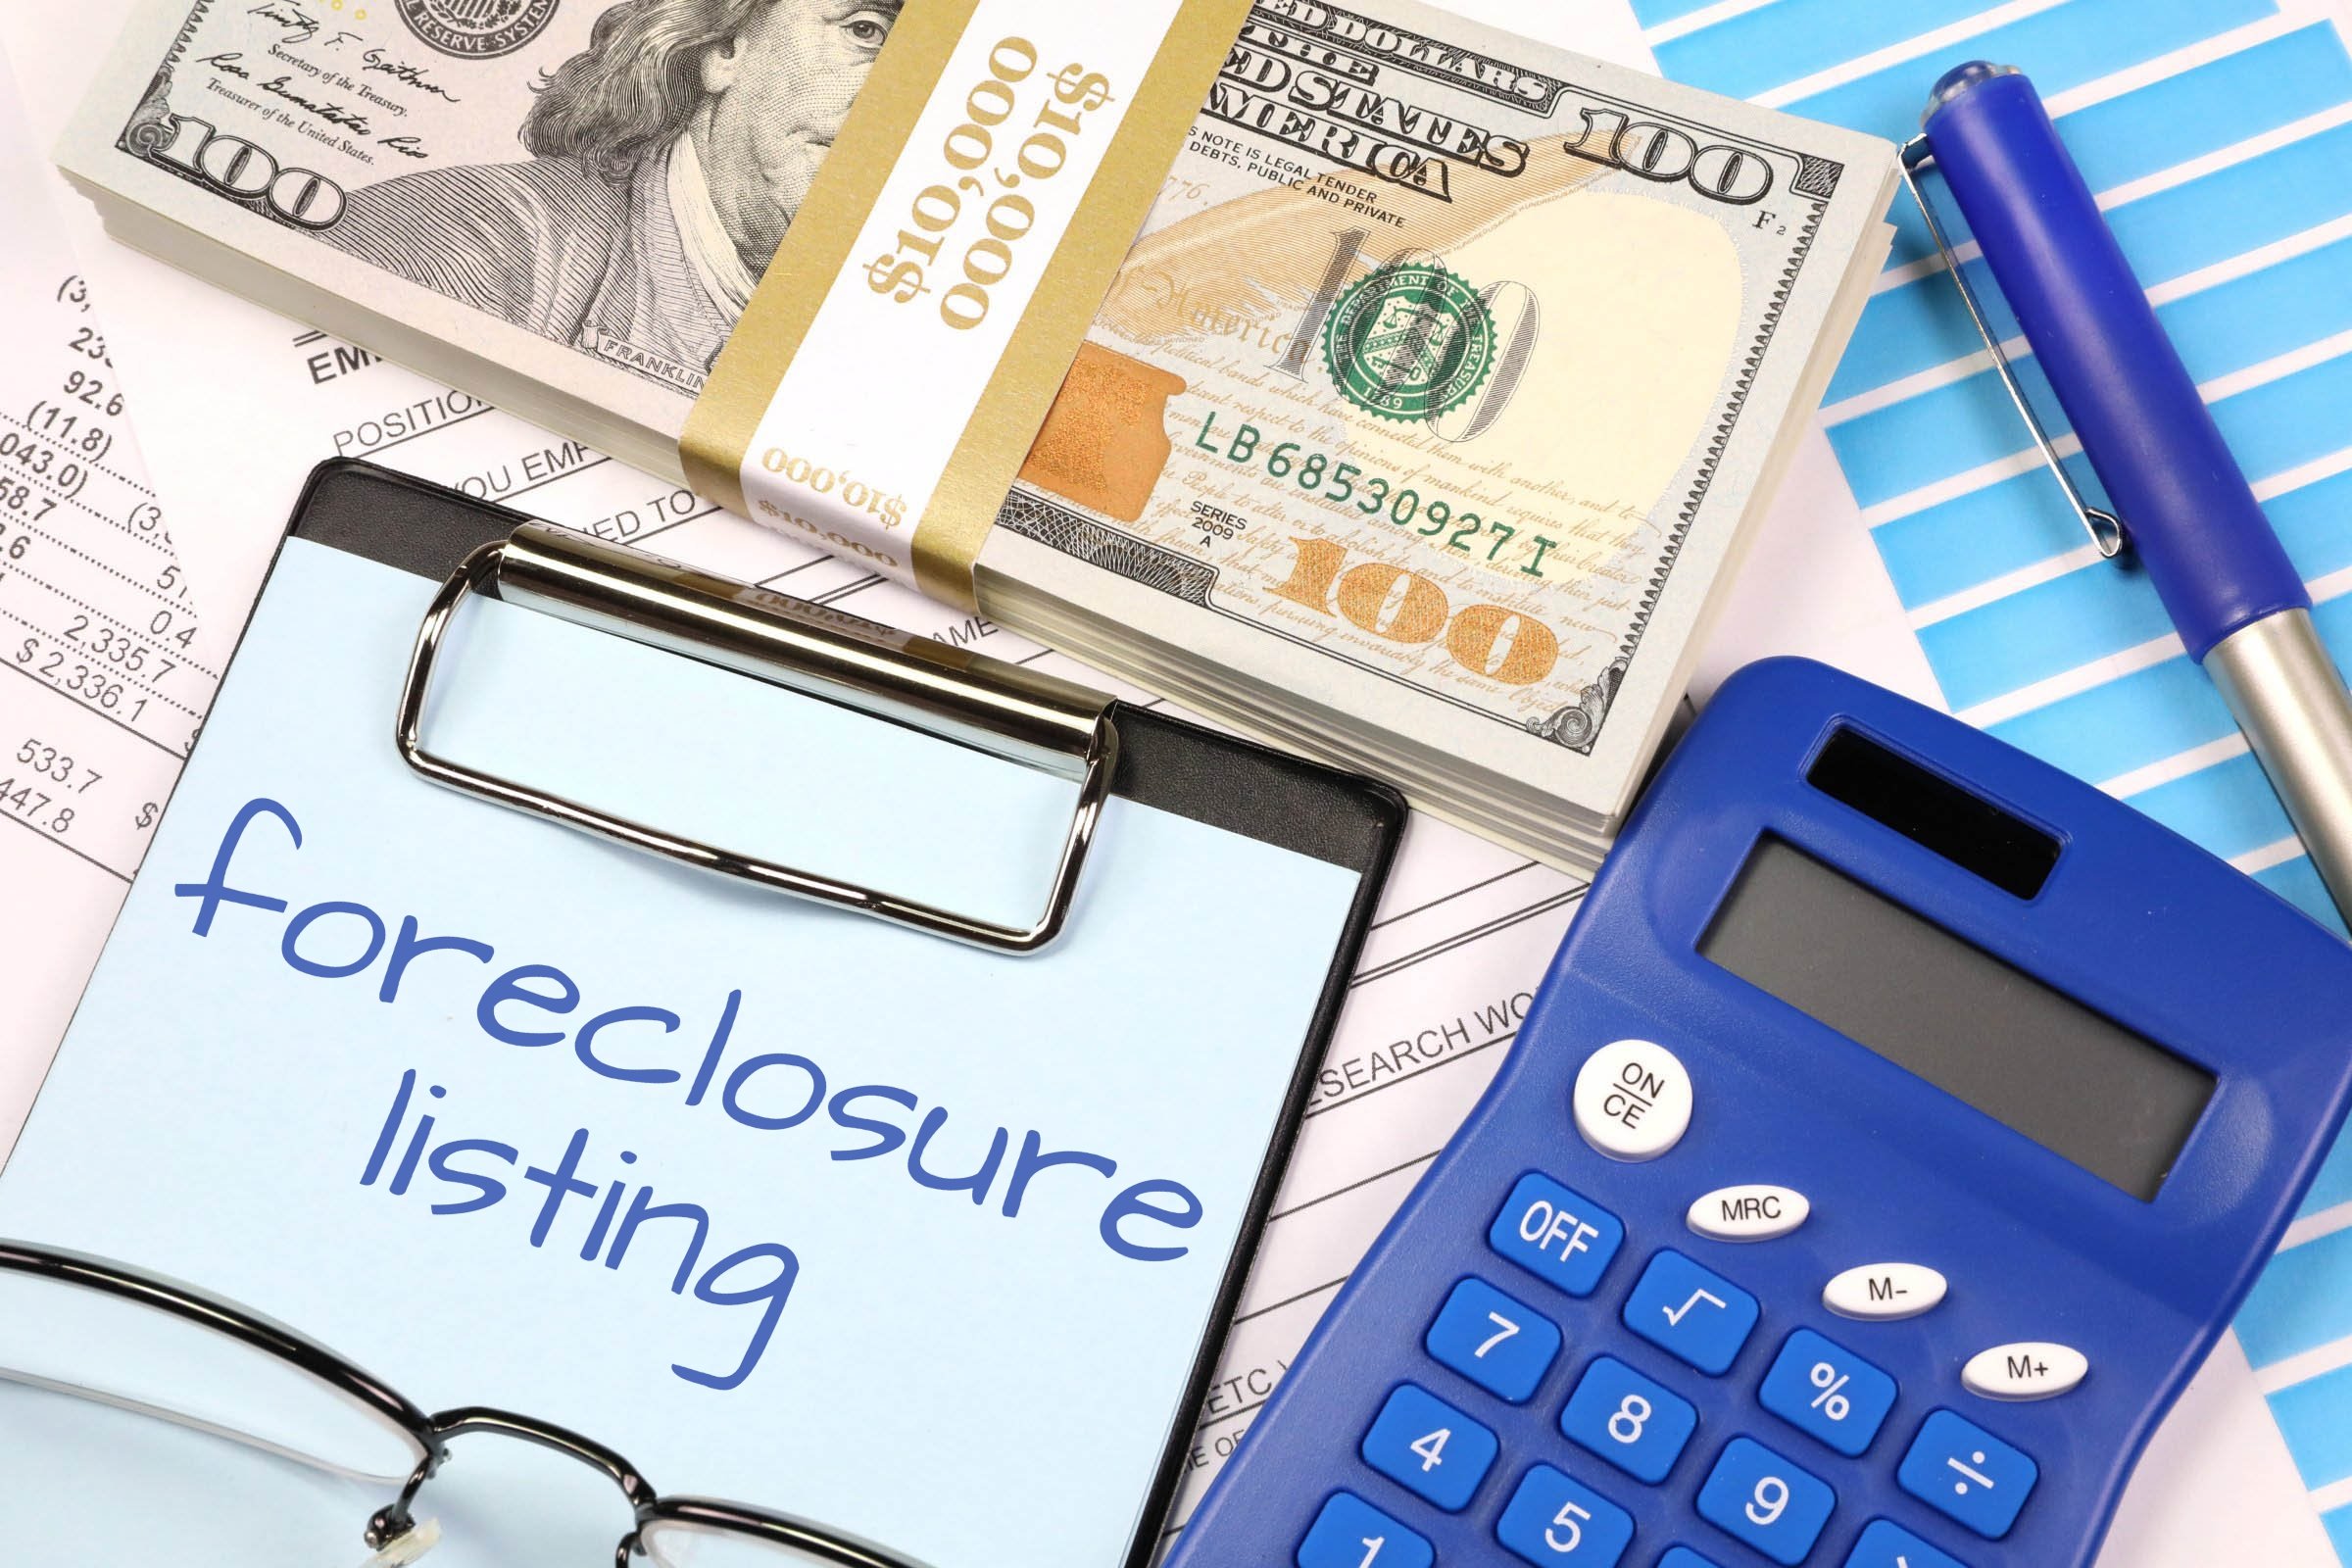 Foreclosure Listing